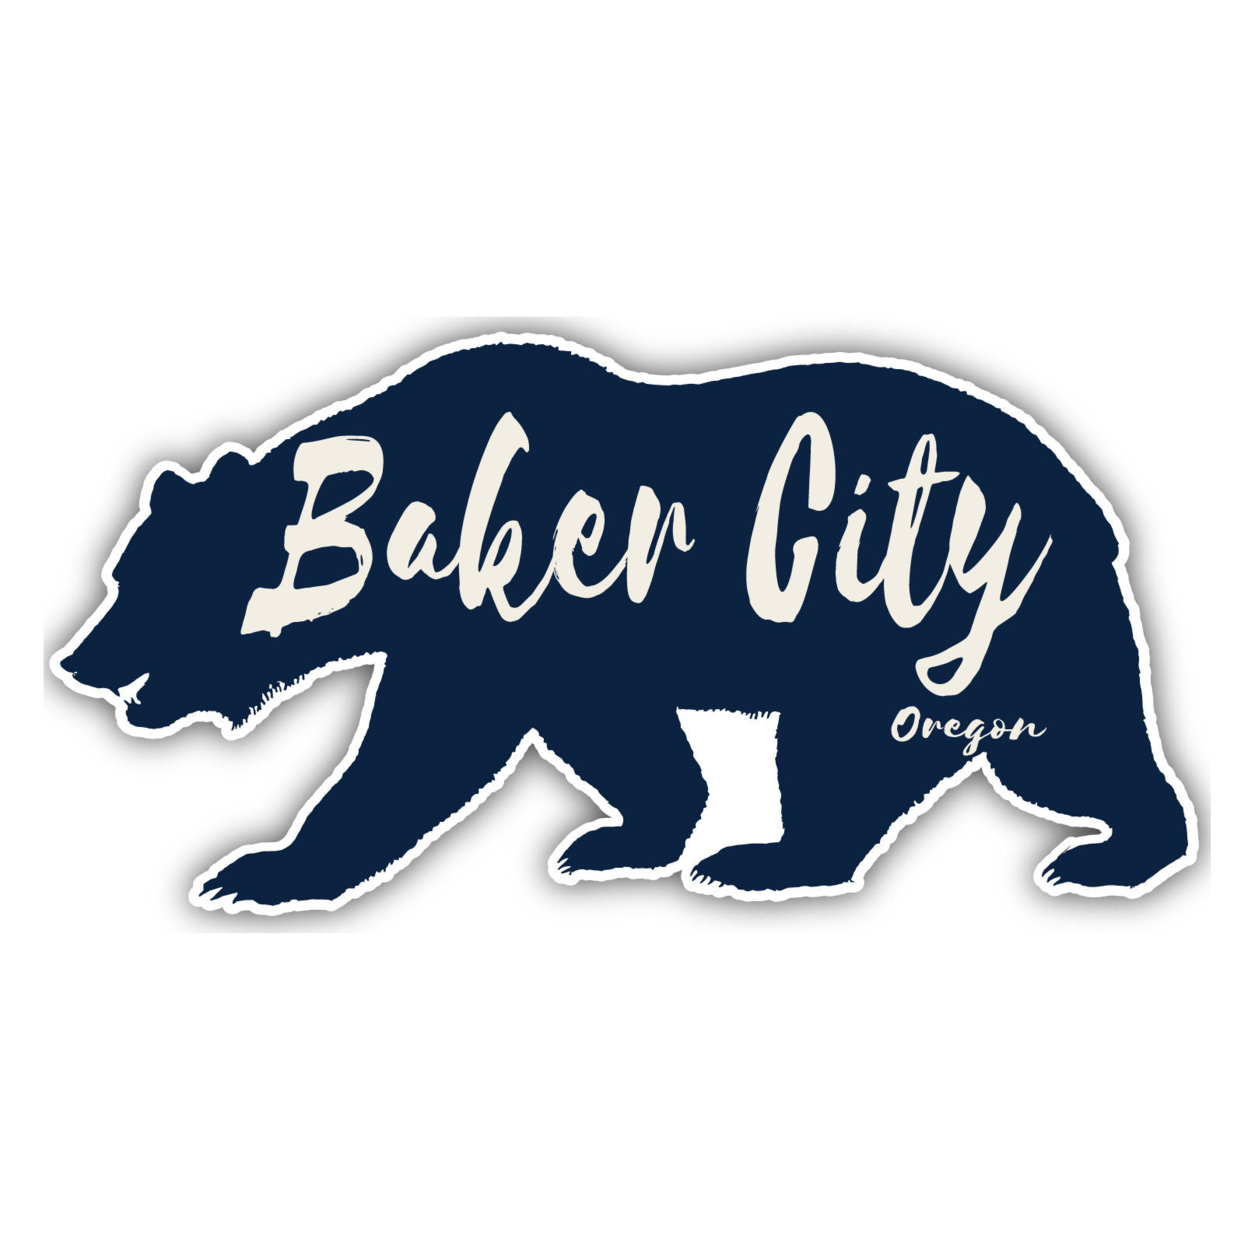 Baker City Oregon Souvenir Decorative Stickers (Choose Theme And Size) - Single Unit, 10-Inch, Bear